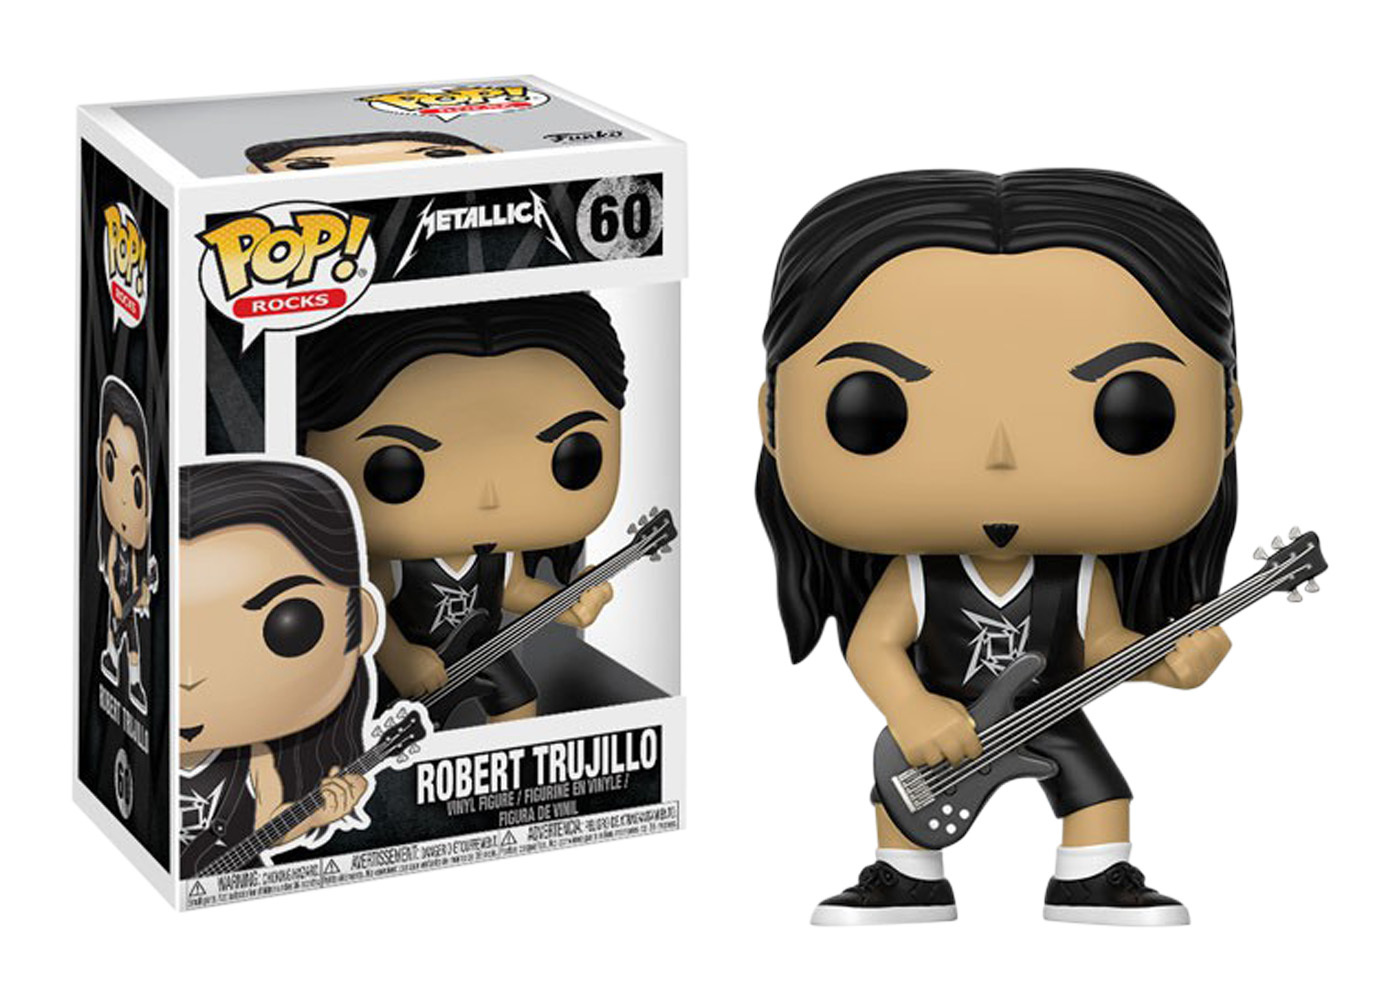 Brand New Rocks Robert Trujillo Metallica #60 Funko Pop